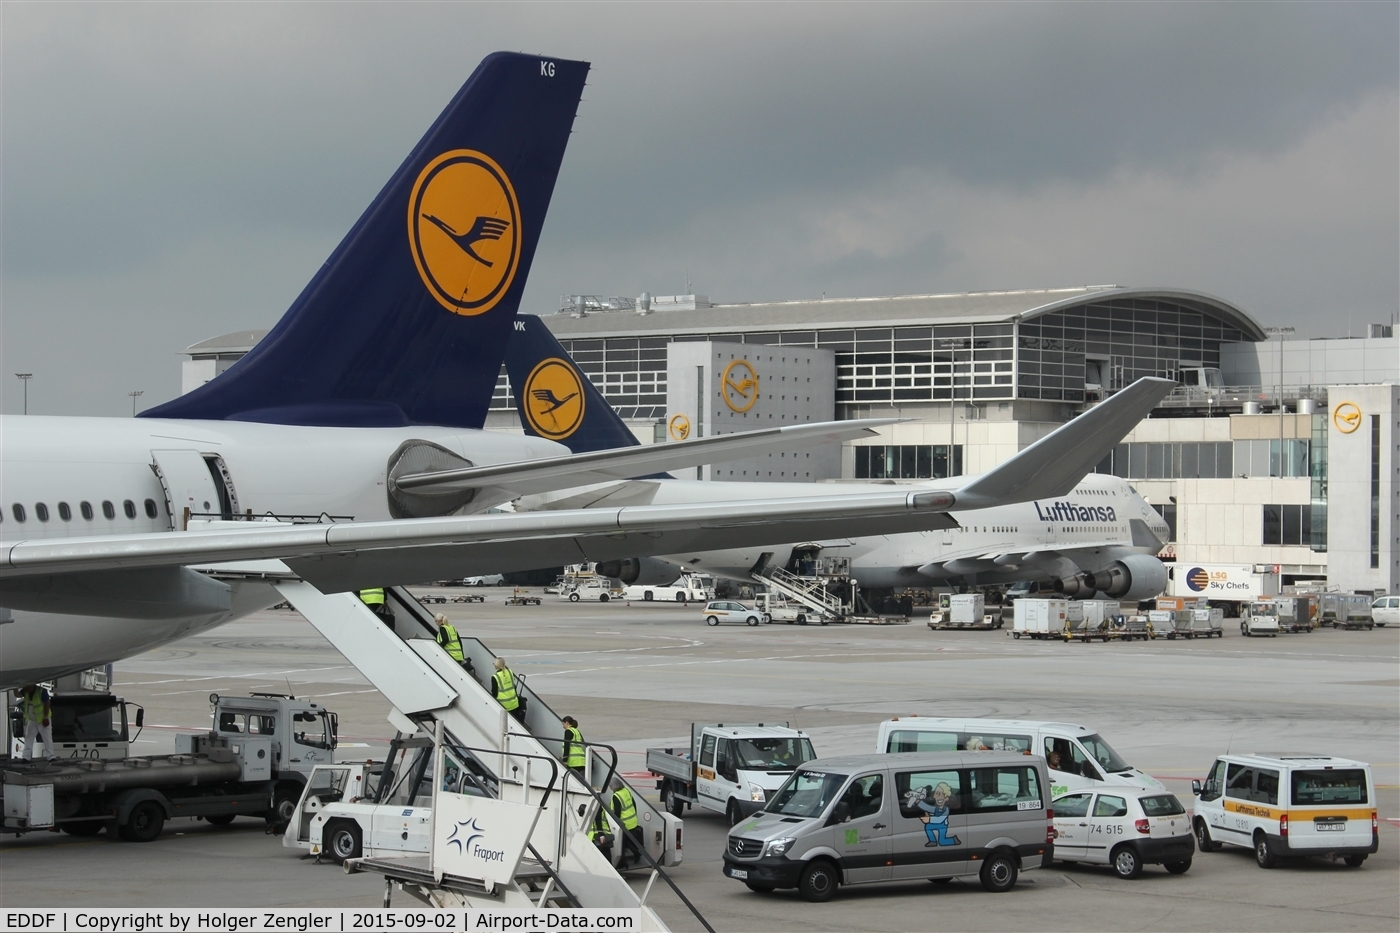 Frankfurt International Airport, Frankfurt am Main Germany (EDDF) - Situation on apron A at terminal 1...